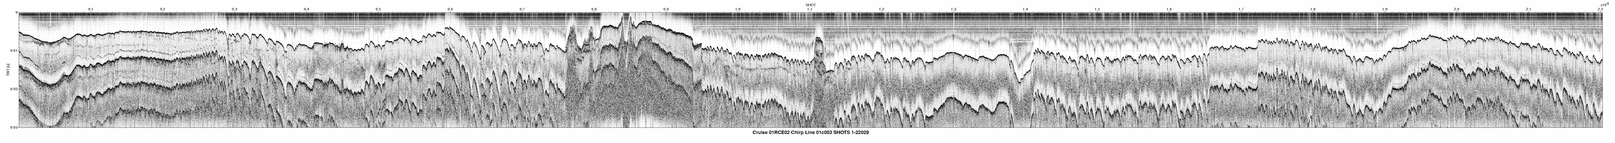 01RCE02 01c003 seismic profile image thumbnail